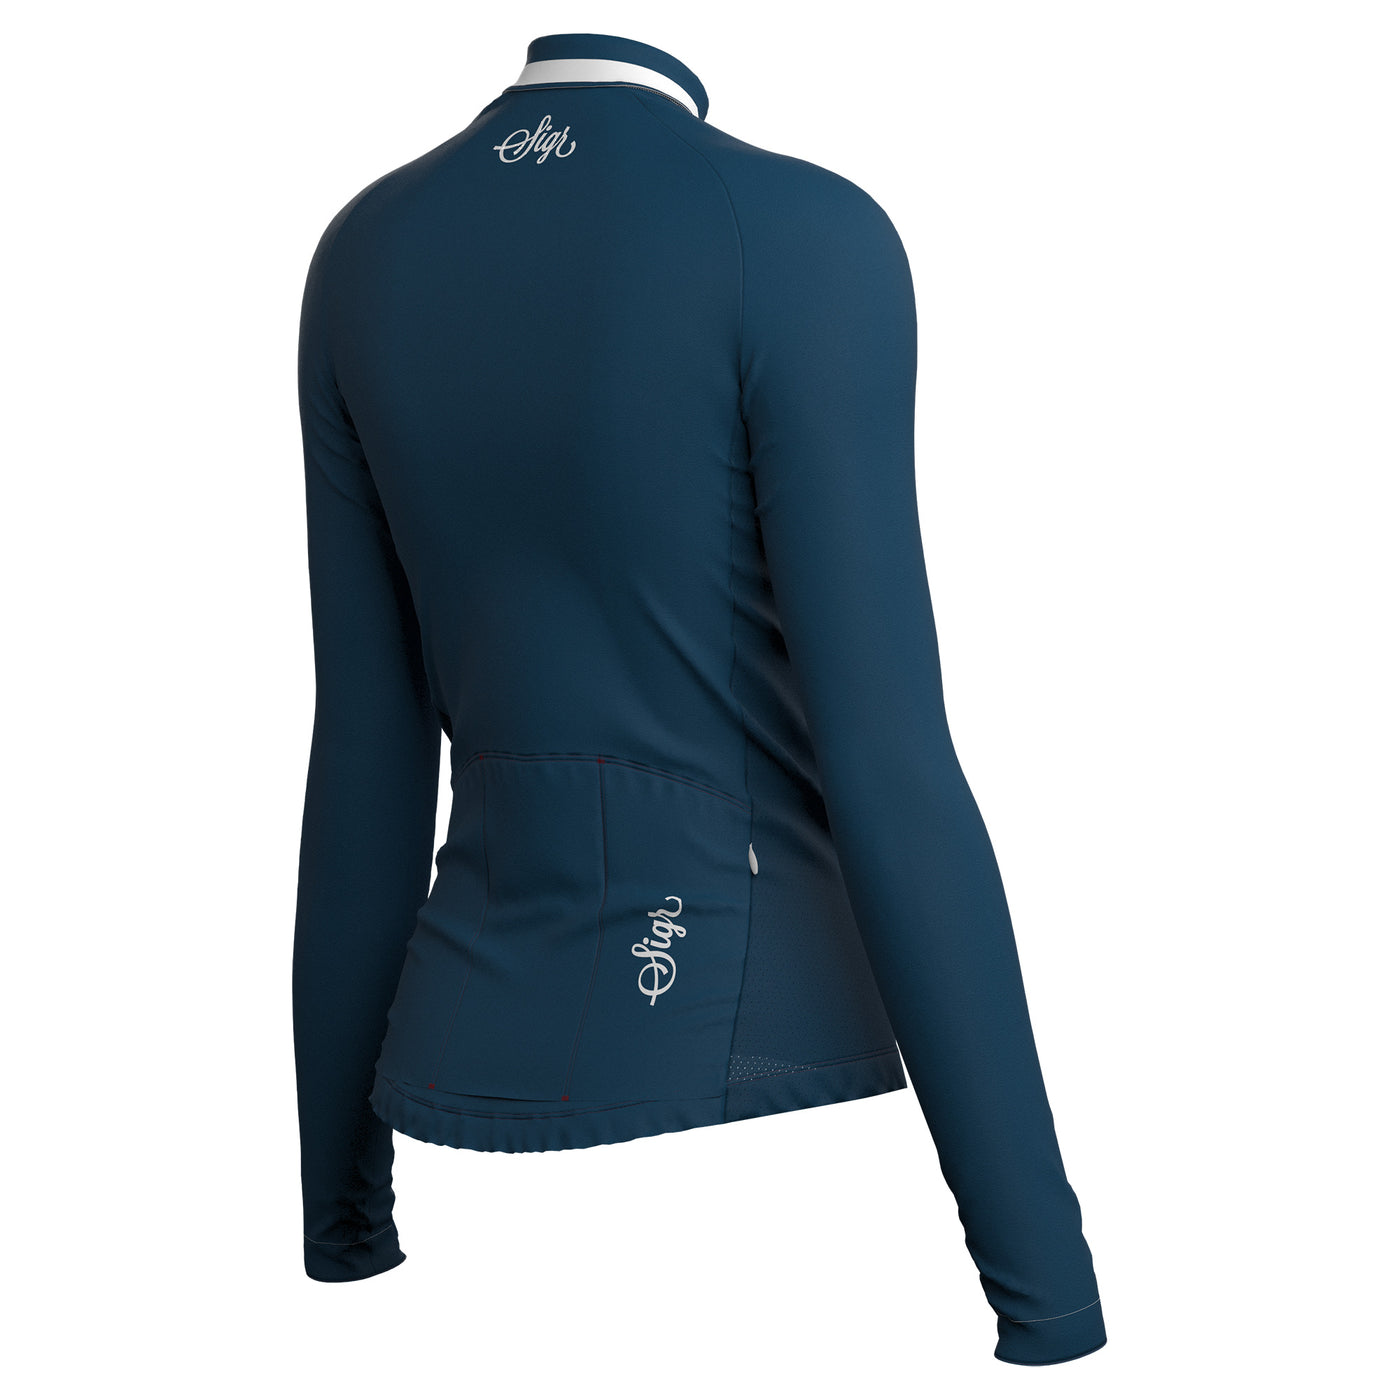 Sigr Krokus Blue - Warmer Long Sleeved Jersey for Women